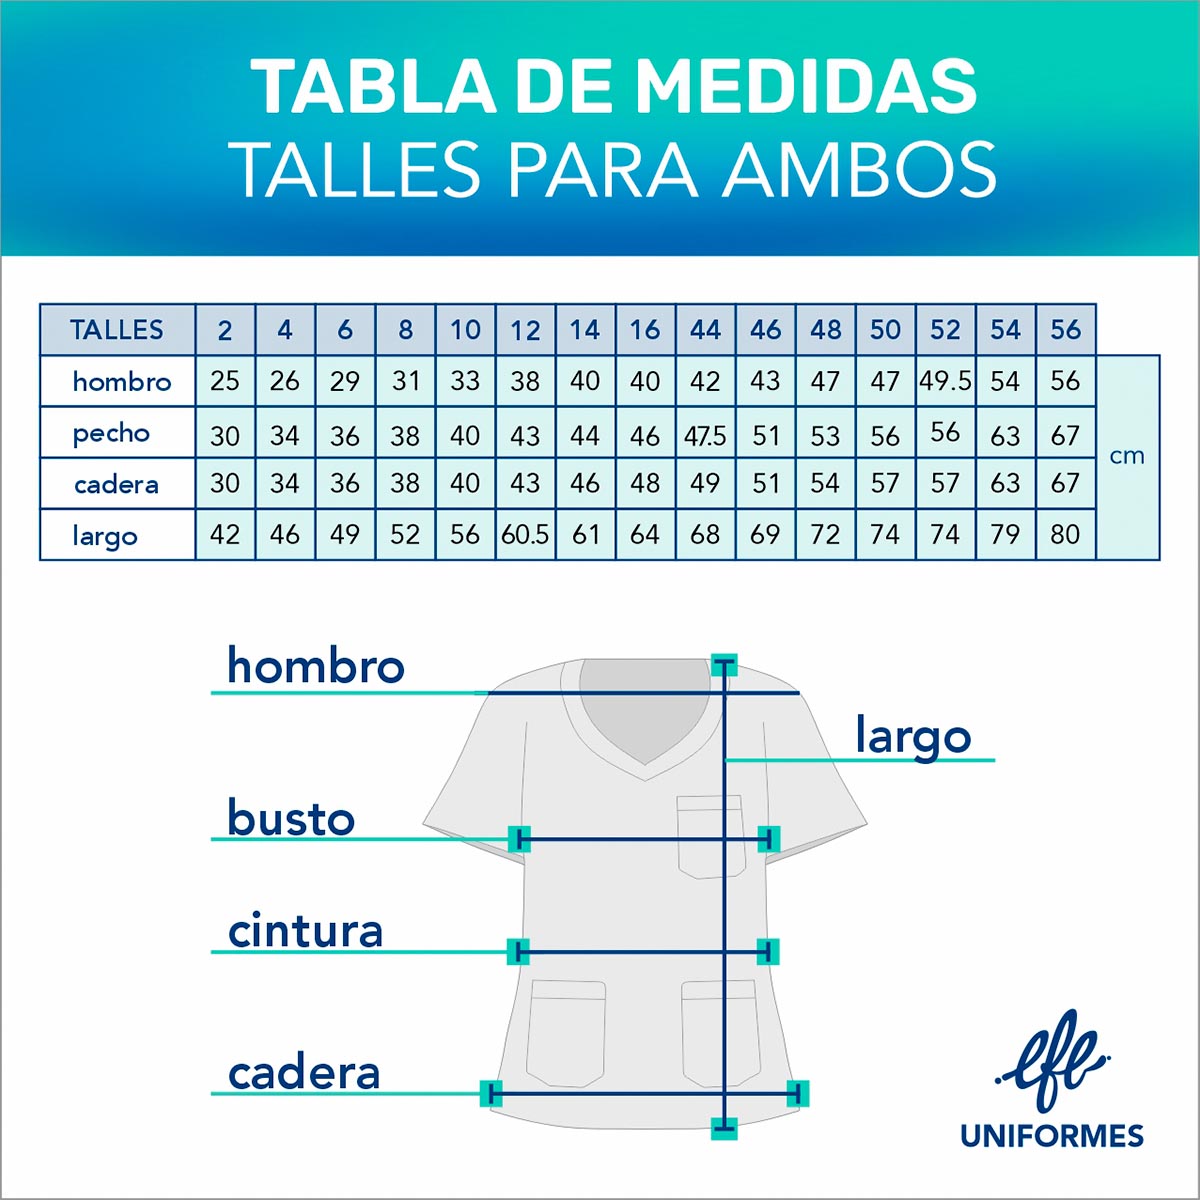 TABLA DE MEDIDAS AMBO CHAQUETA